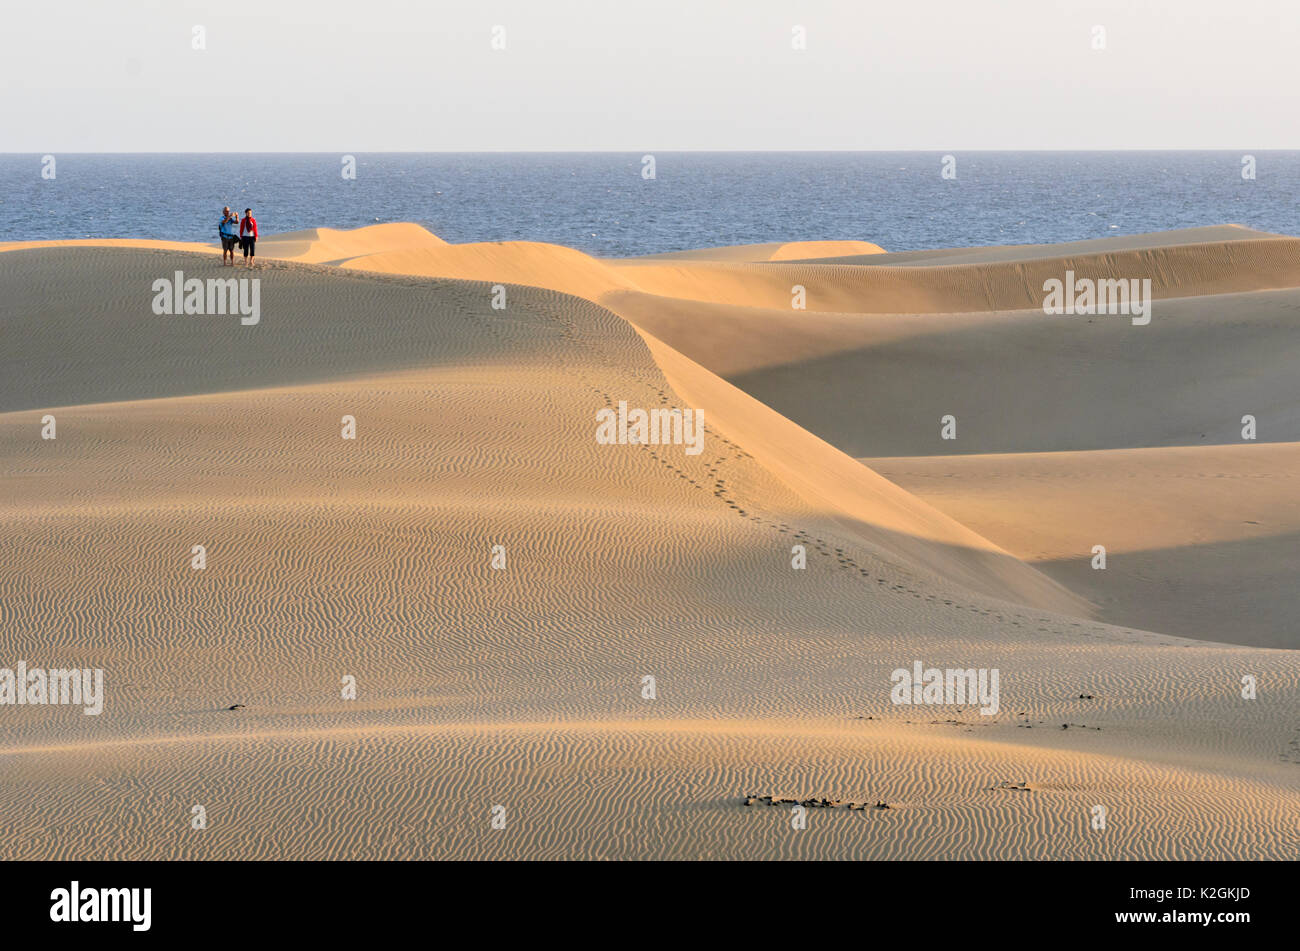 Shifting sand dunes, Maspalomas, Gran Canaria, Spain Stock Photo